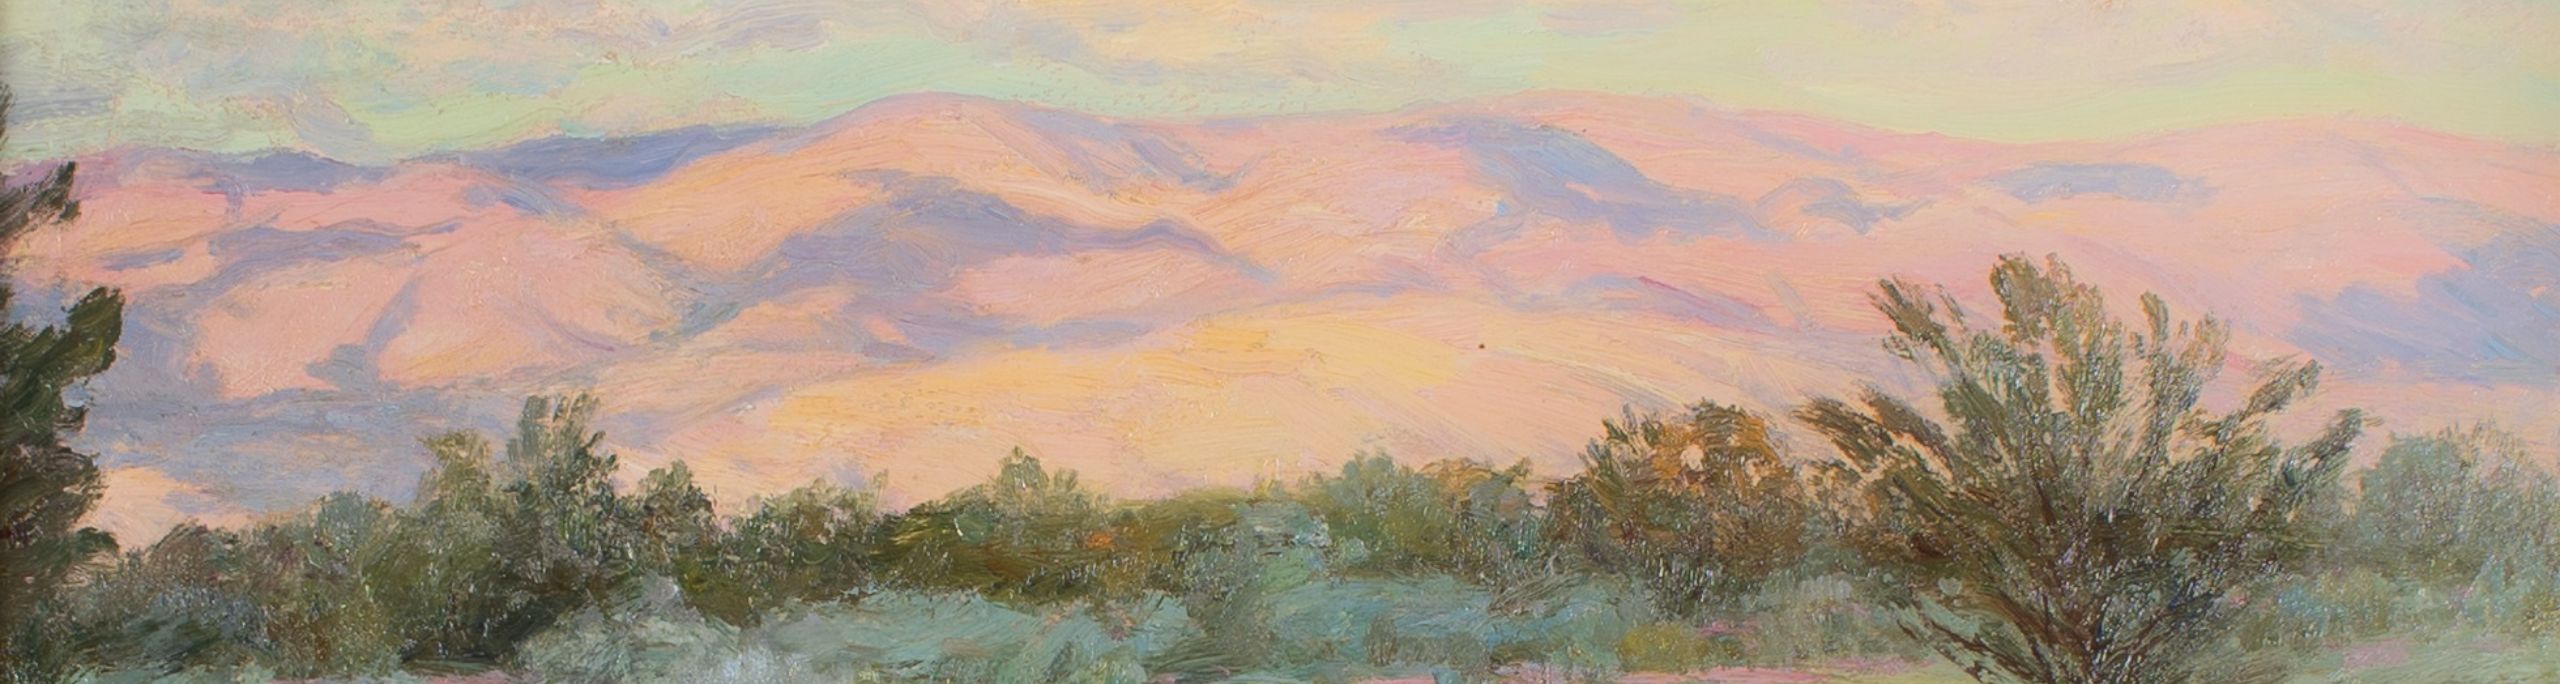 The California Impressionists